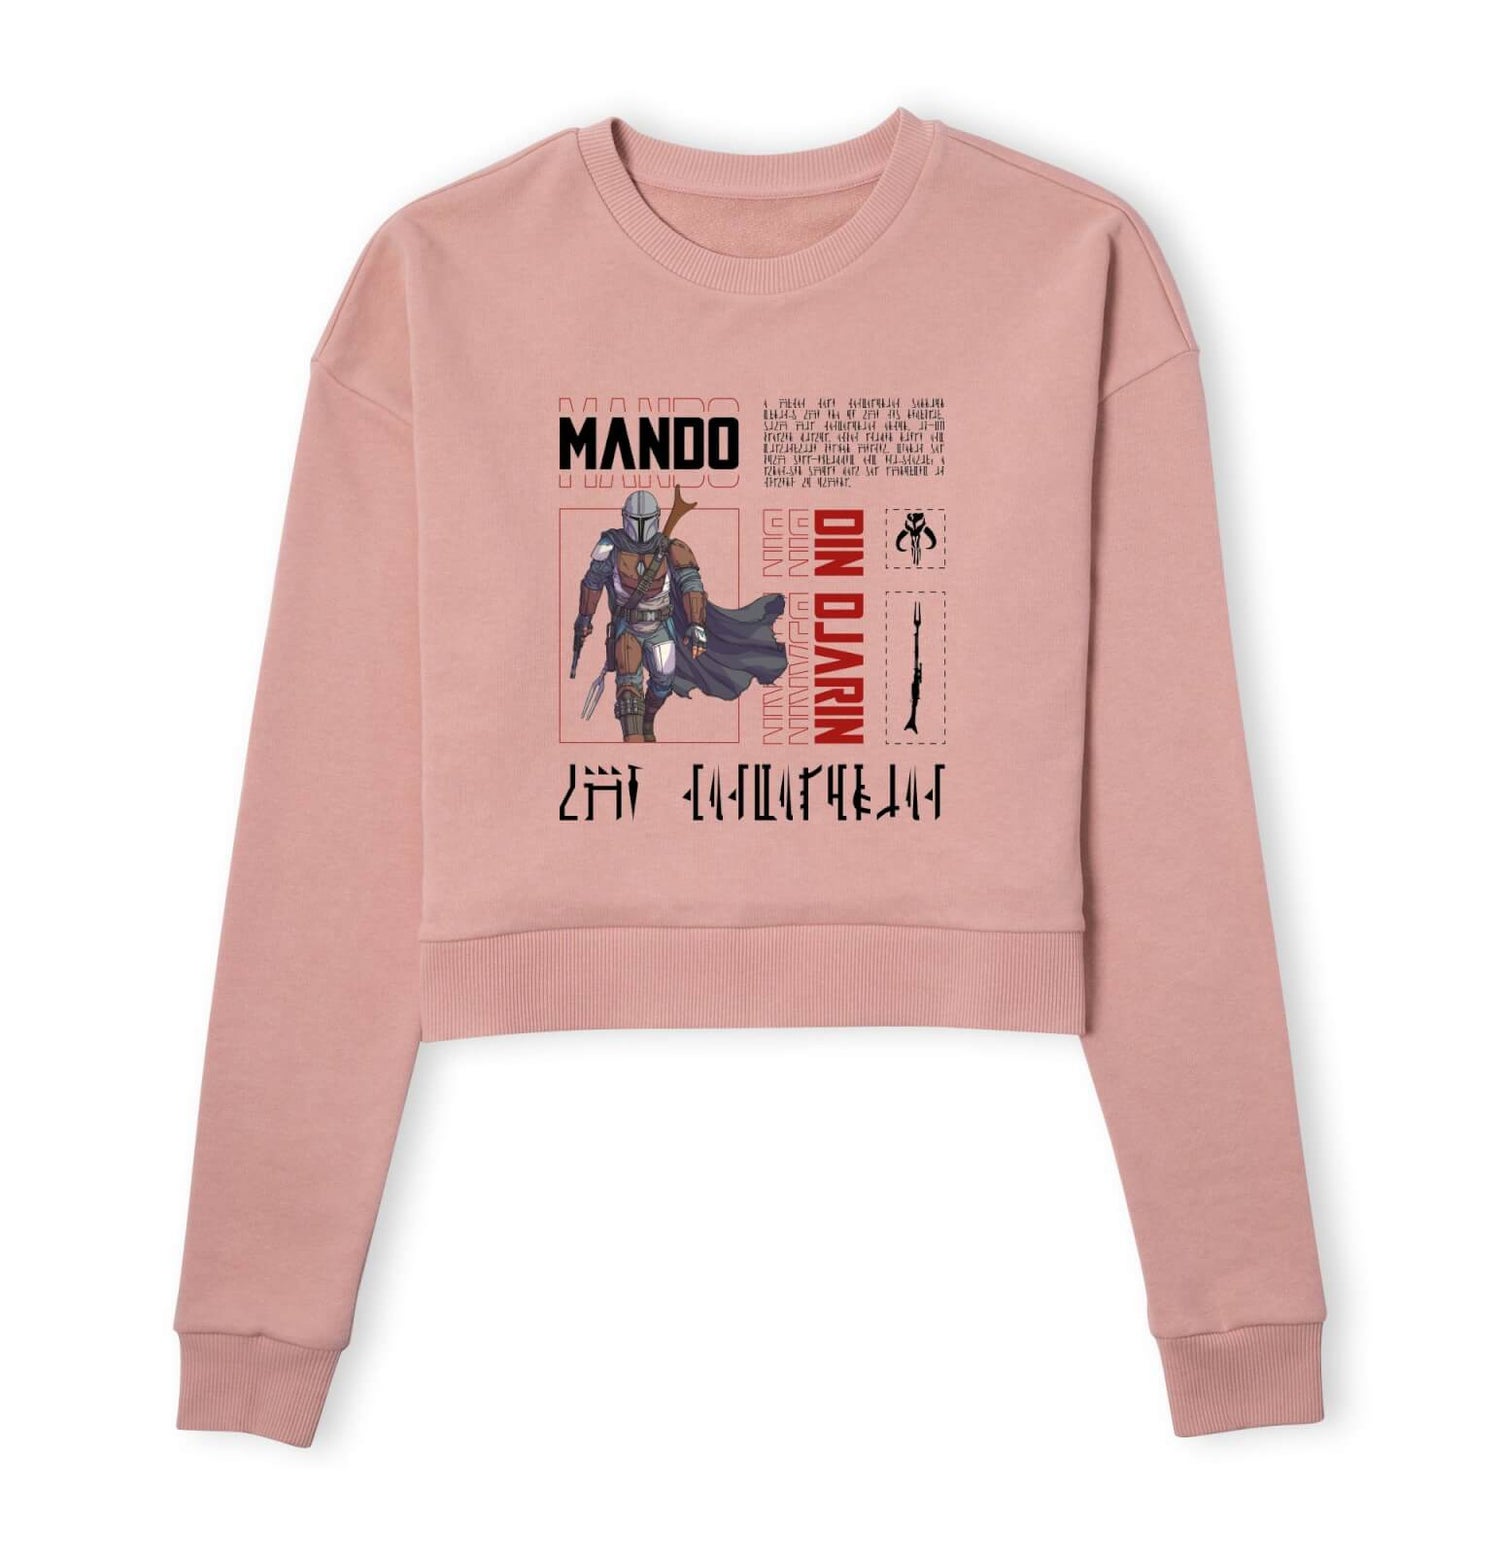 Star Wars The Mandalorian Biography Women's Cropped Sweatshirt - Dusty Pink